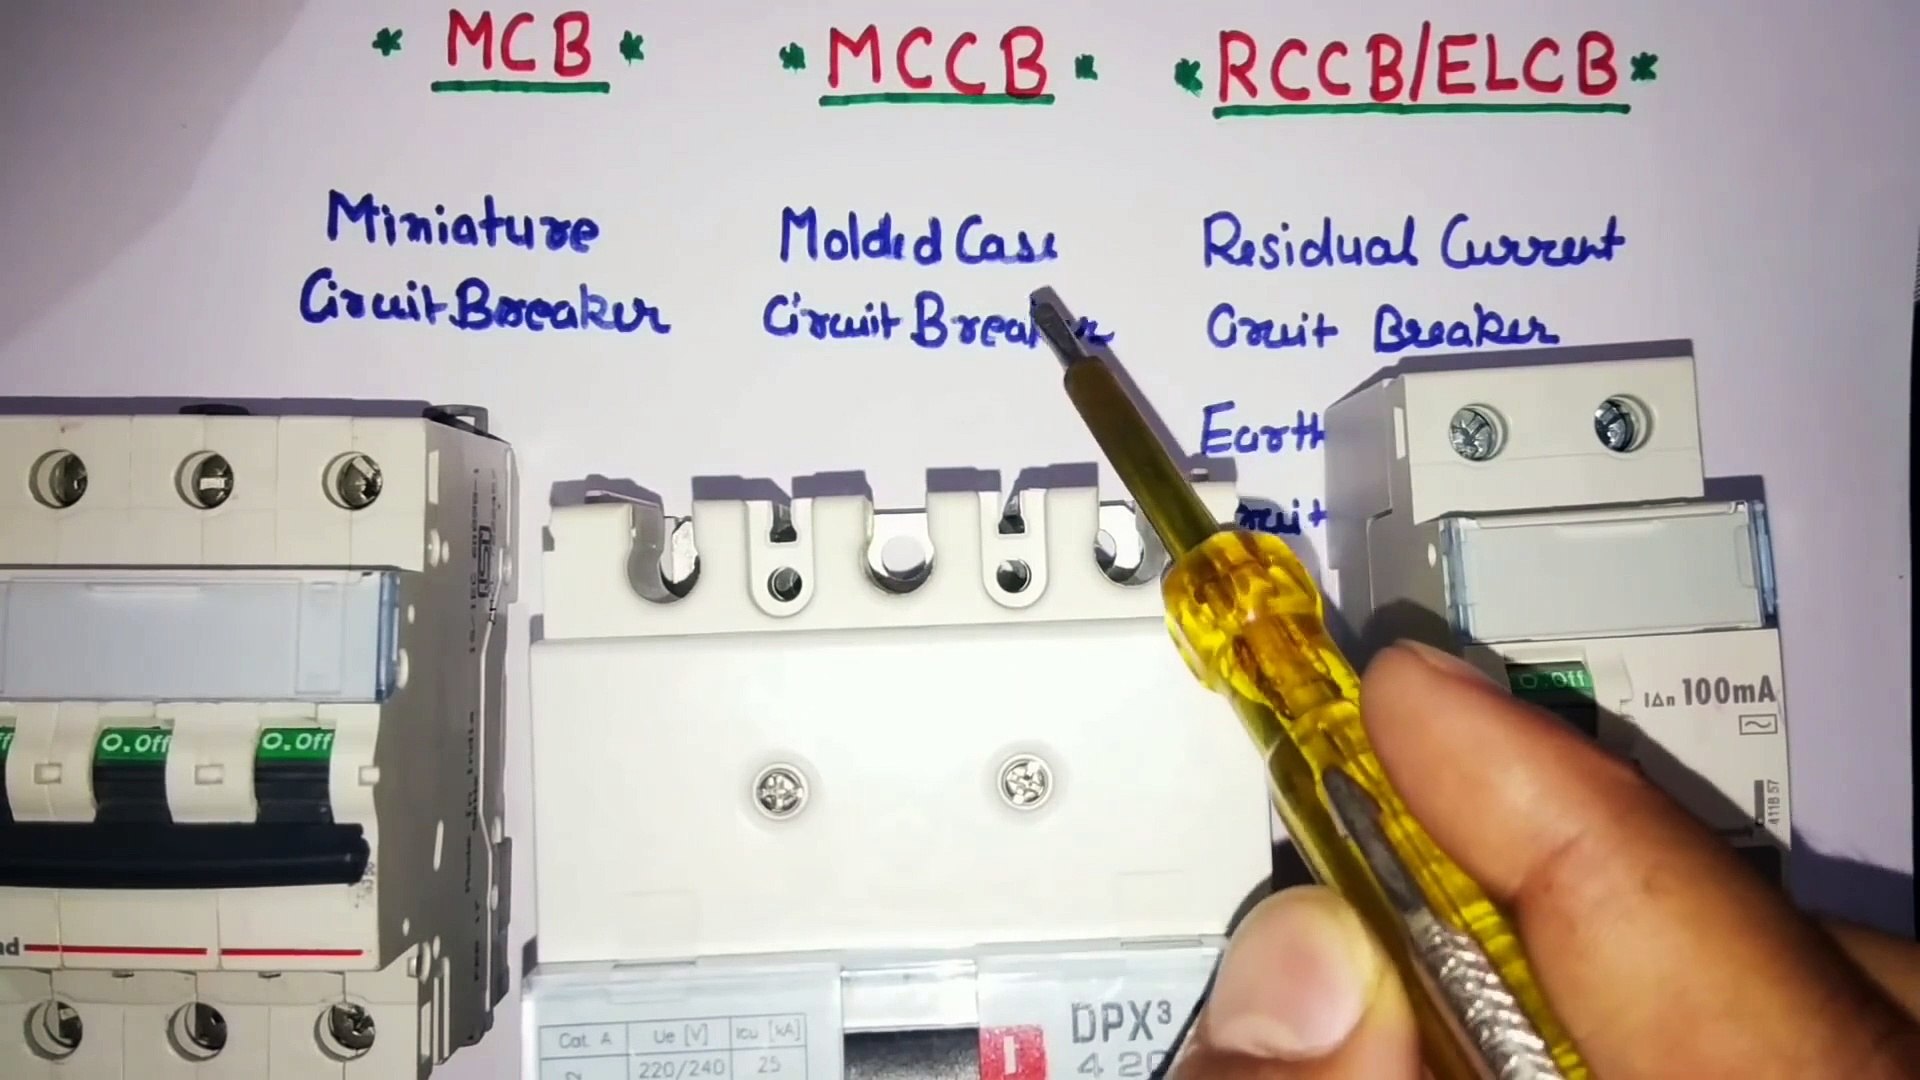 MCB MCCB RCCB ELCB circuit breaker difference - video Dailymotion